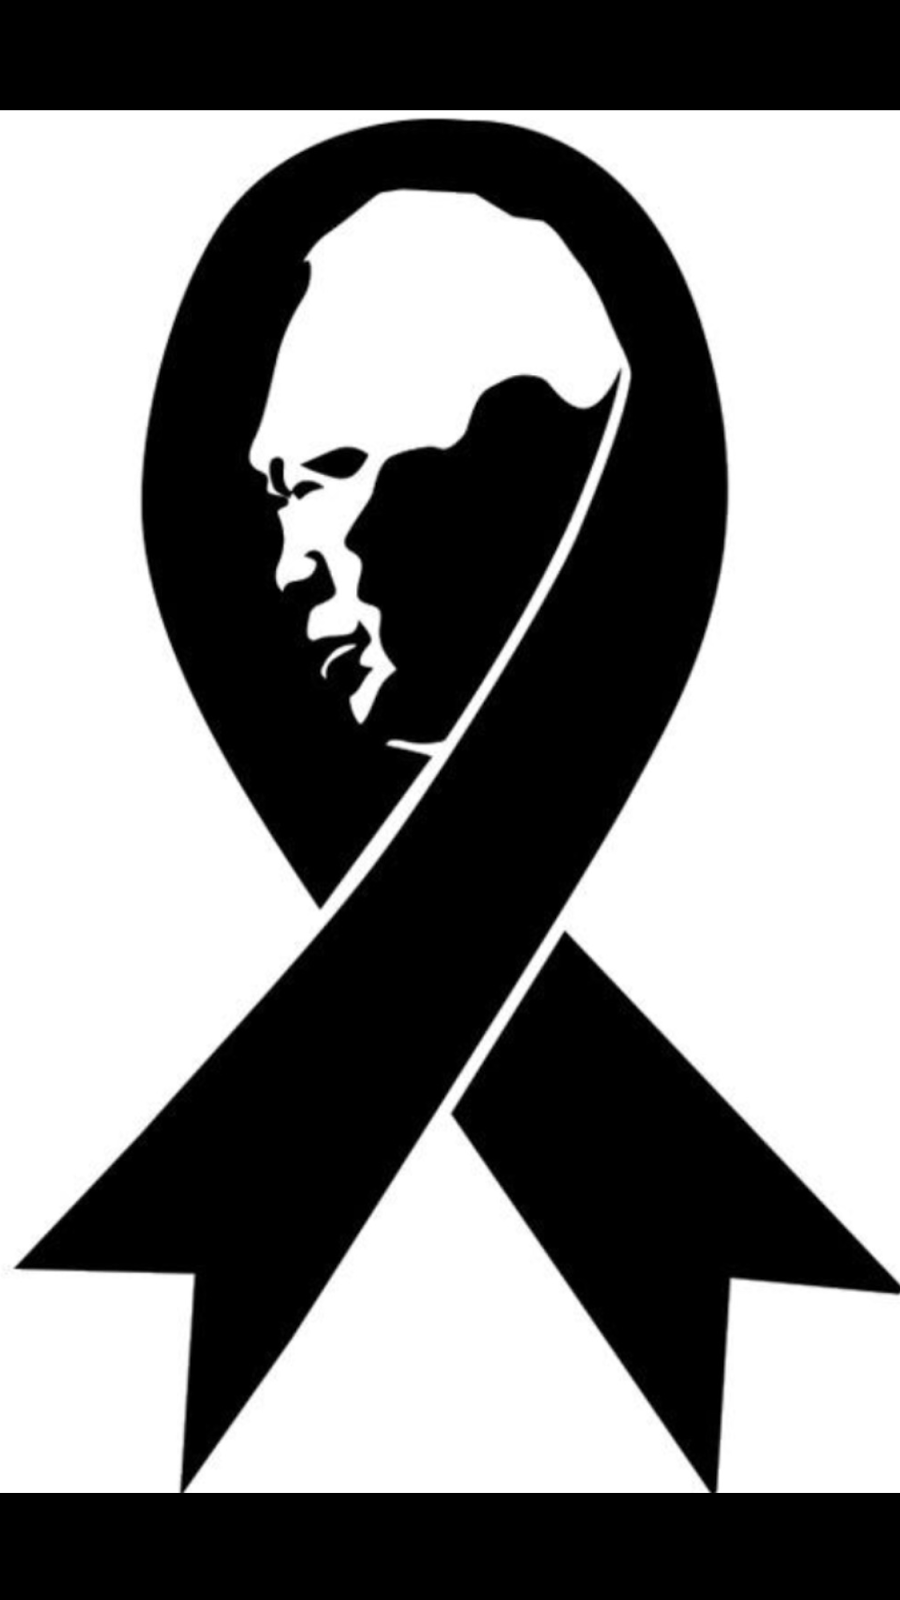 My Tribute : Remembering Lee Kuan Yew 16 Sep 1923 - 23 Mar 2015